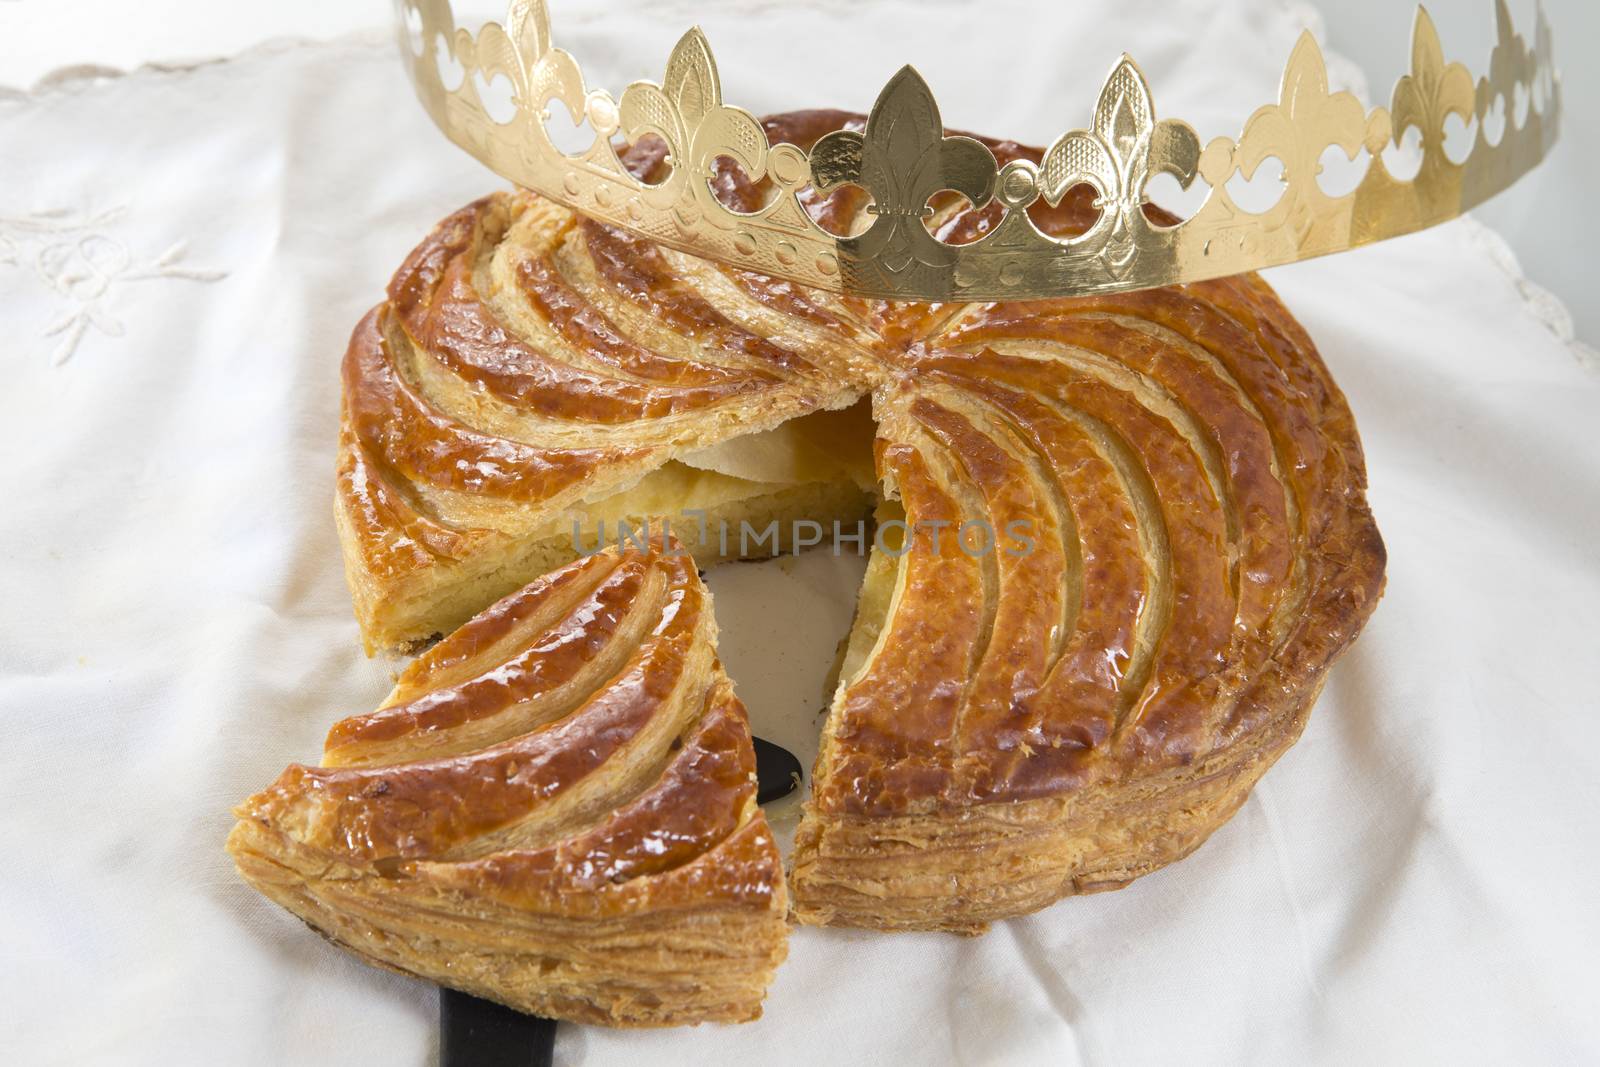 epiphany cakegalette des rois , king cake  by JPC-PROD